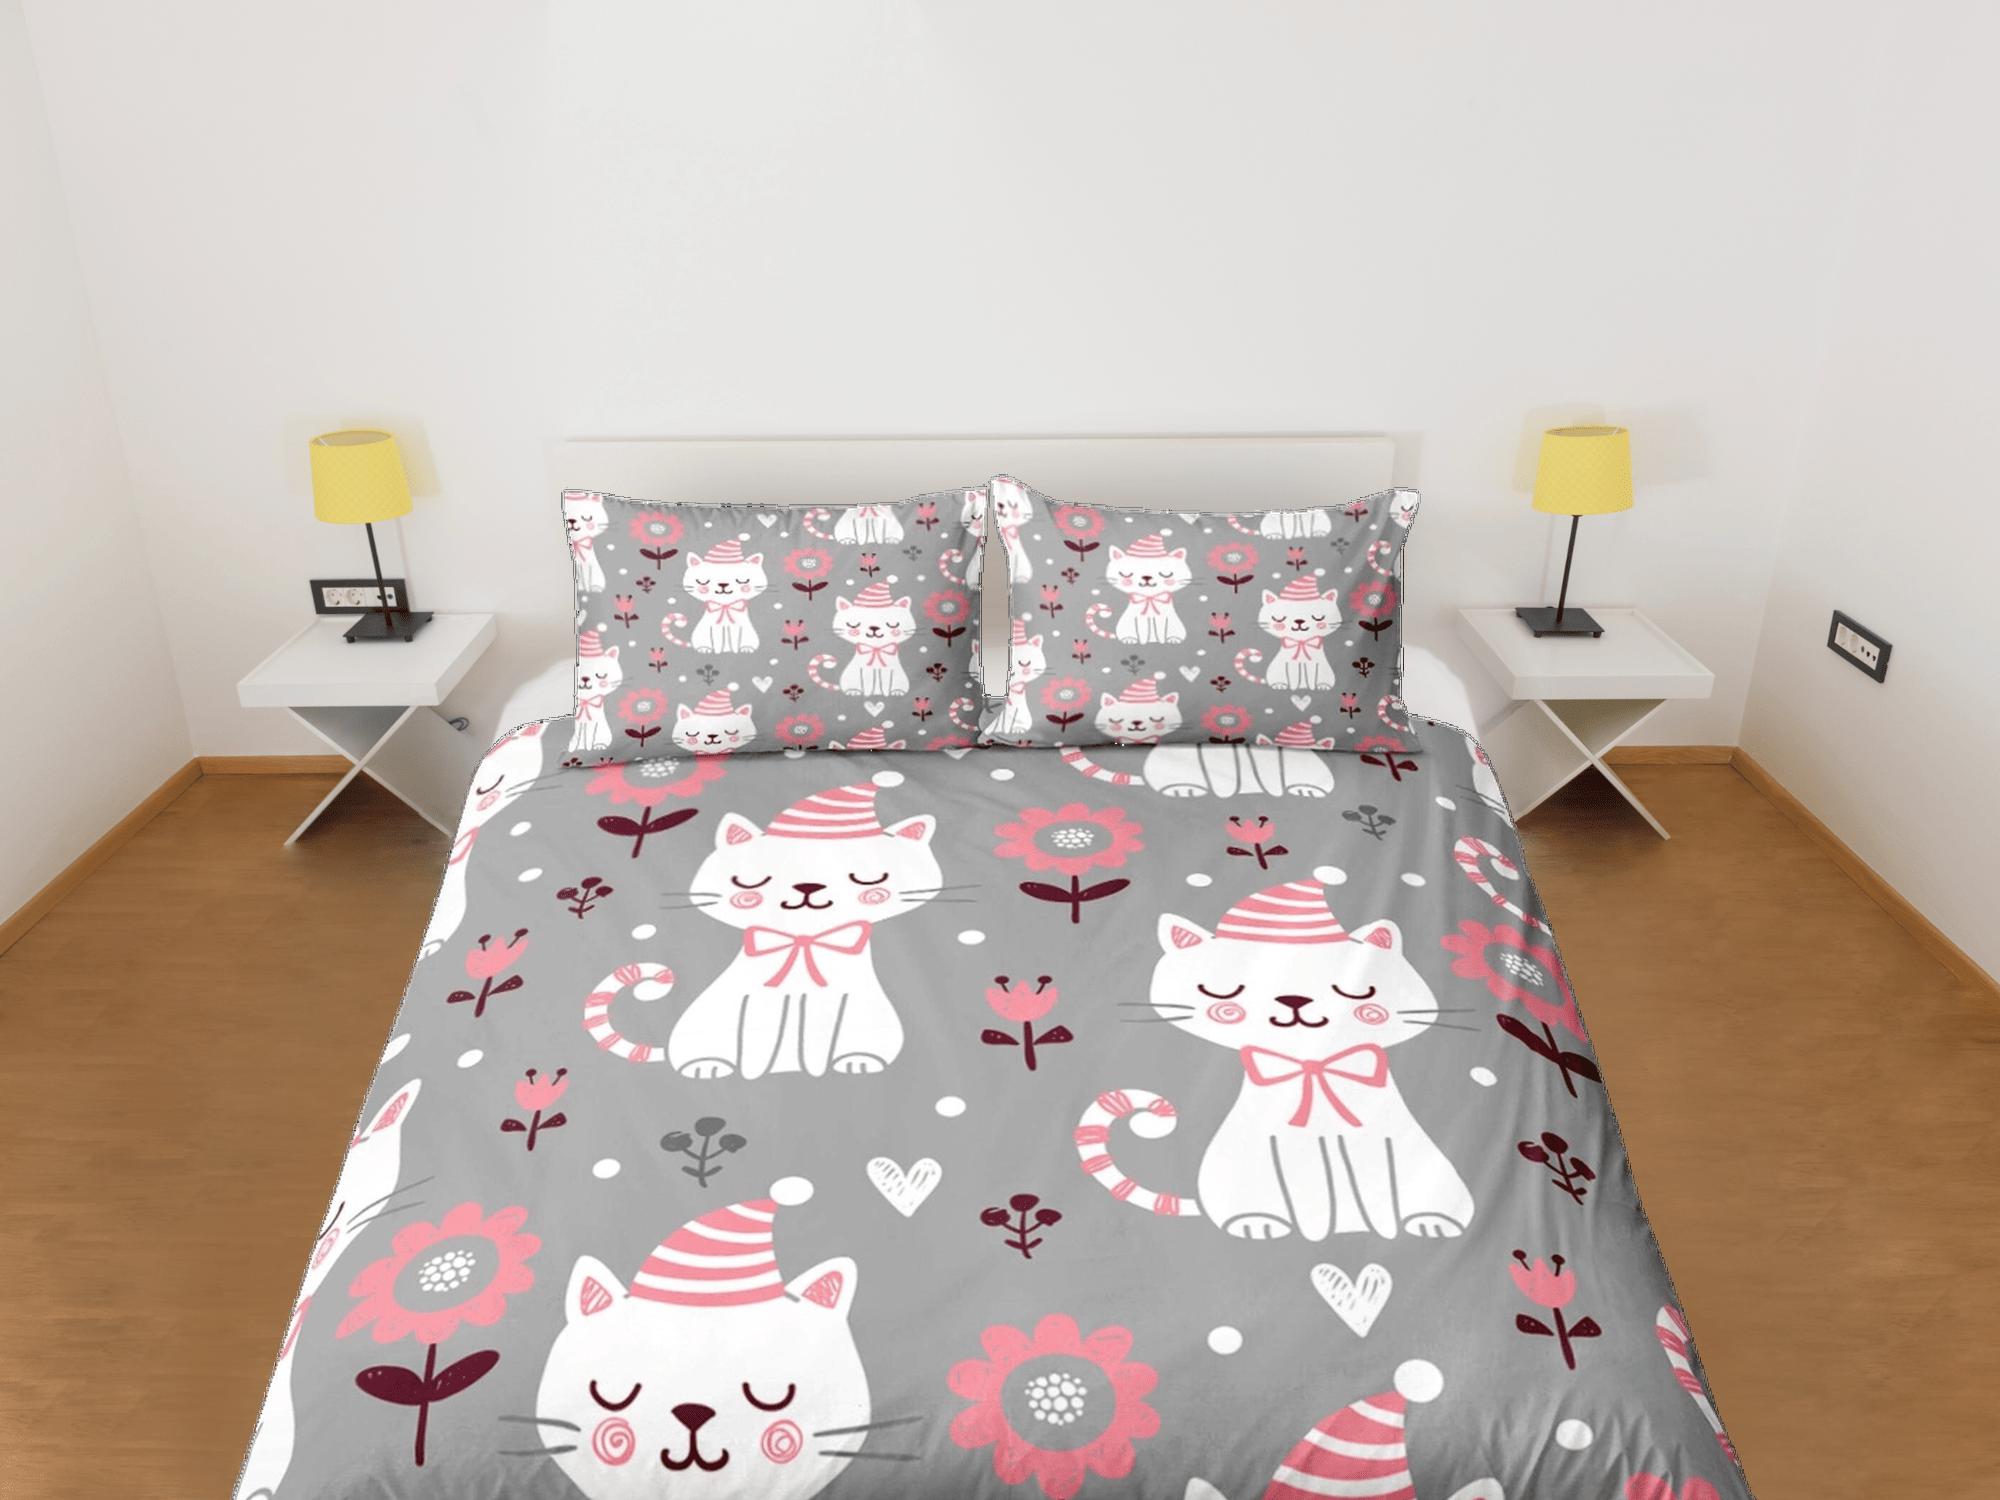 daintyduvet Peaceful white cat bedding grey & pink flowers, toddler bedding, kids duvet cover set, gift for cat lovers, baby bedding, baby shower gift